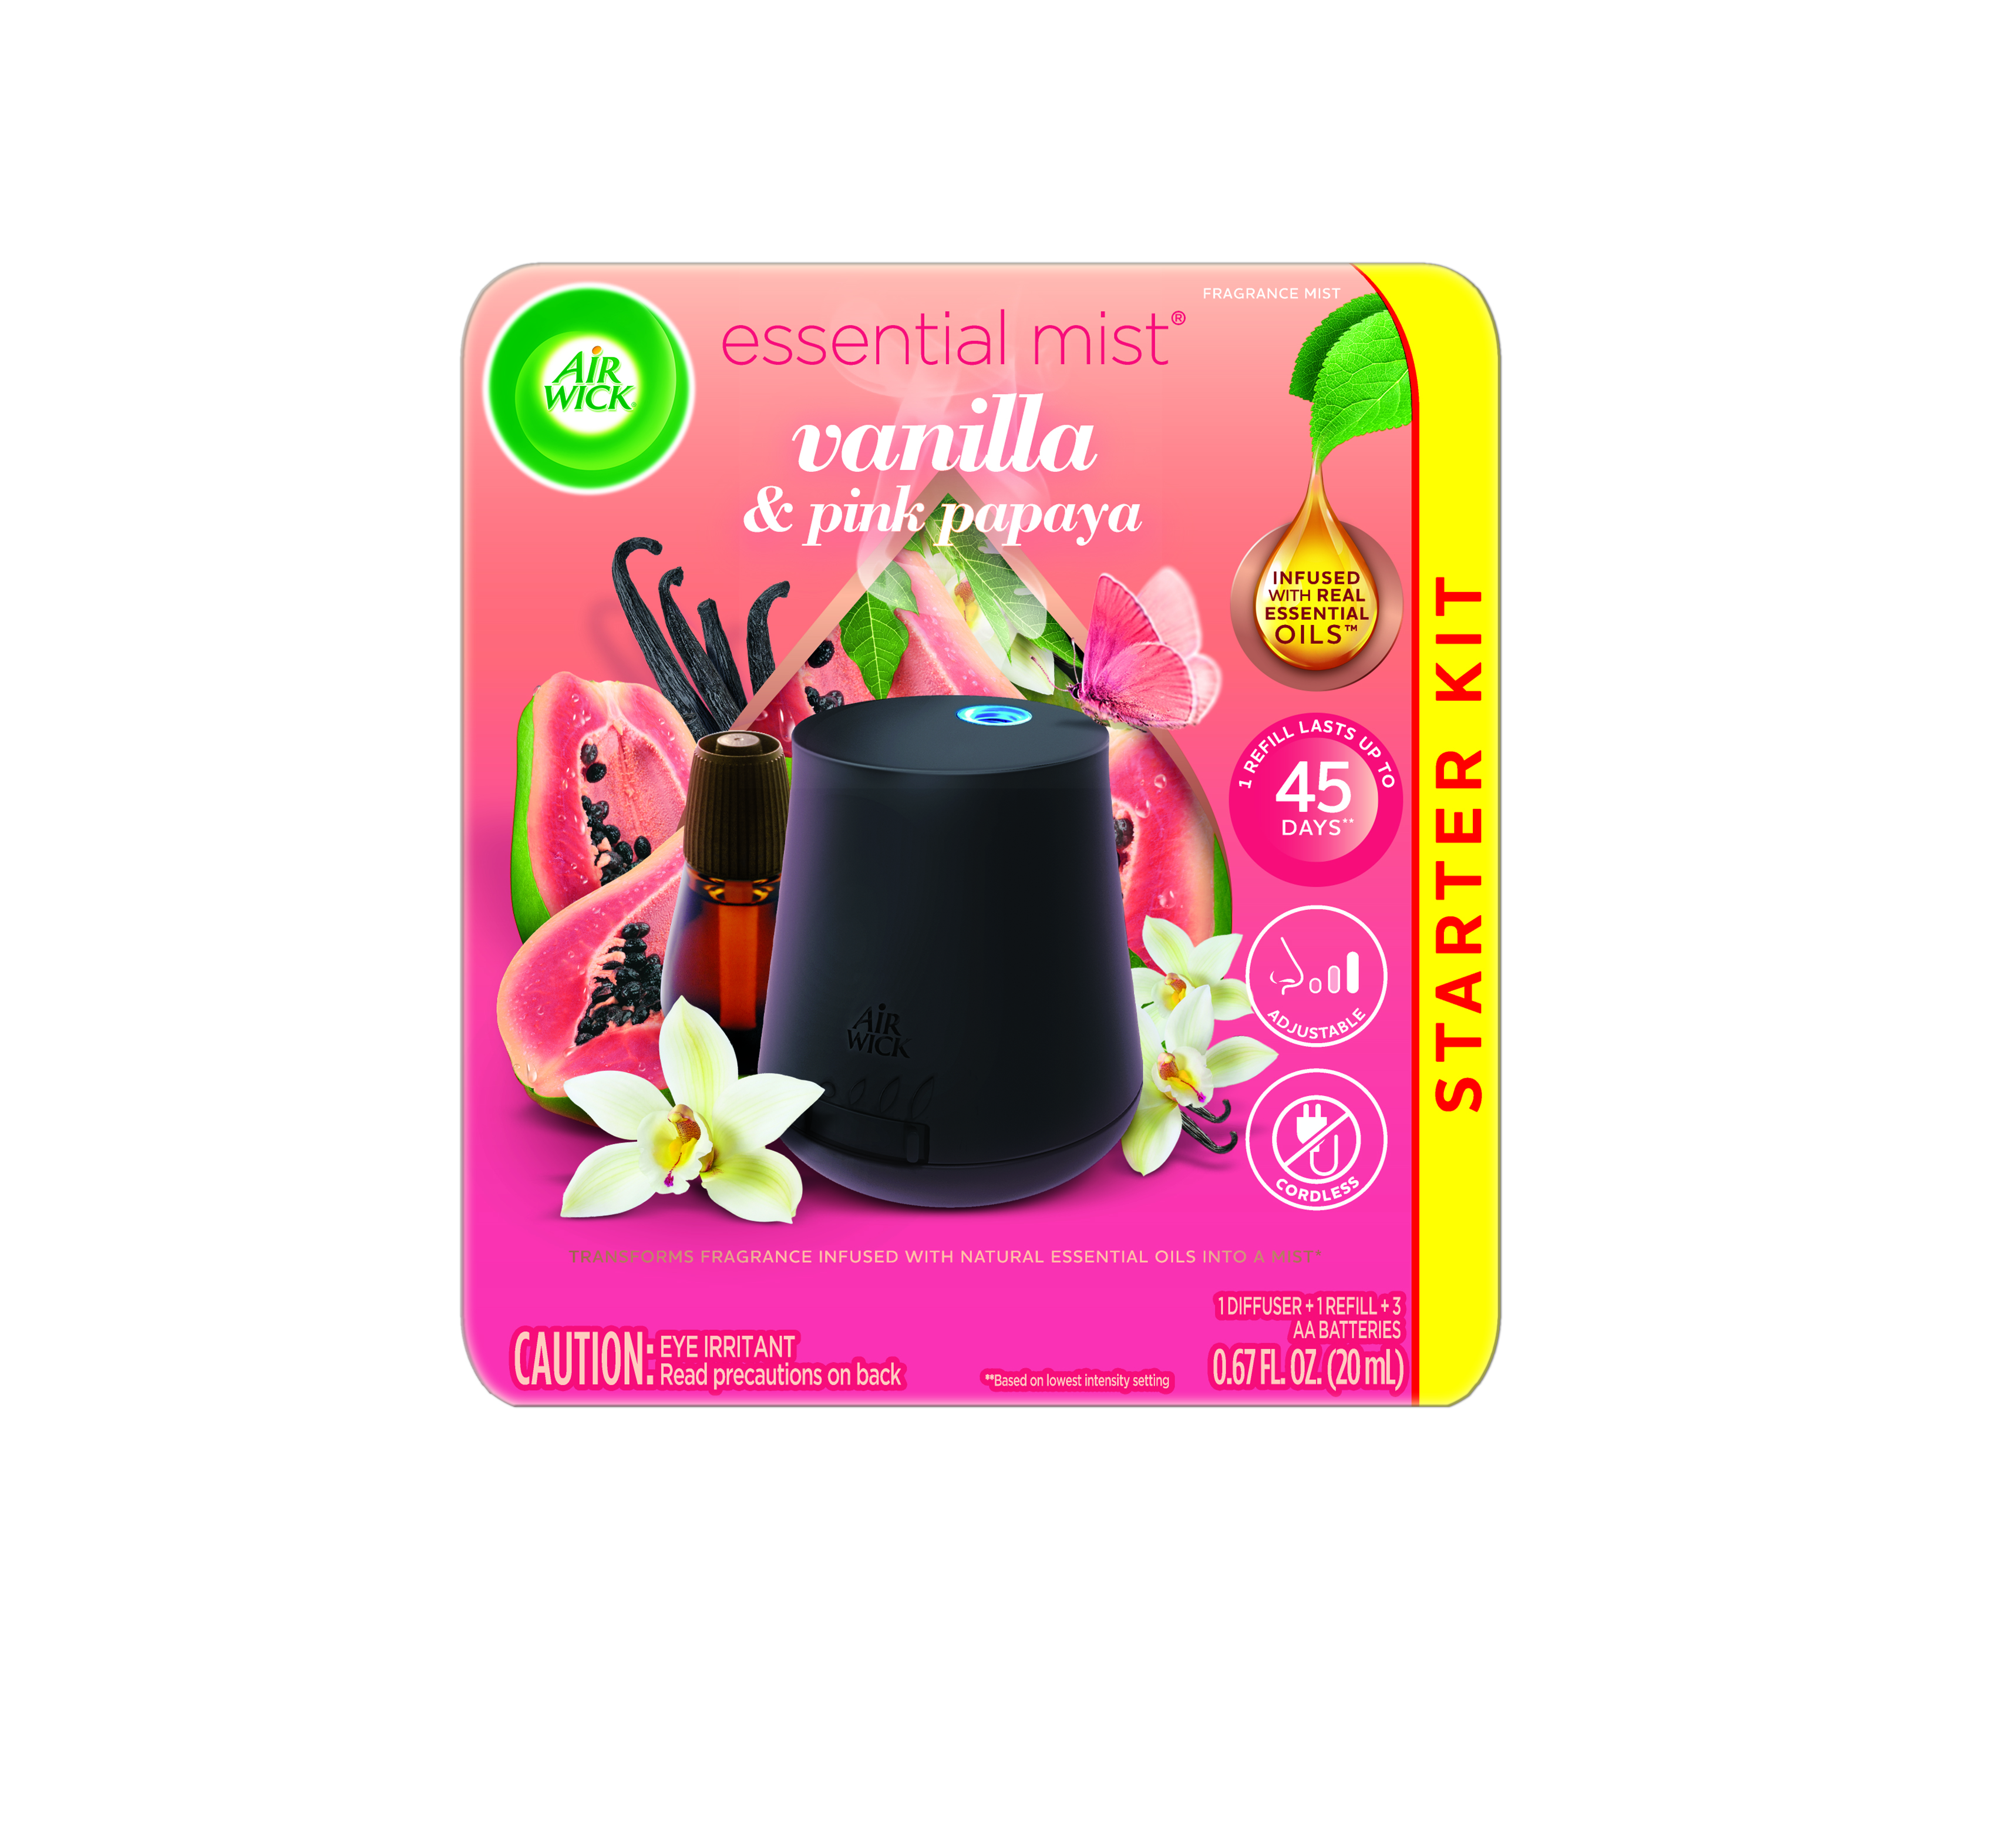 AIR WICK Essential Mist  Vanilla  Pink Papaya  Kit